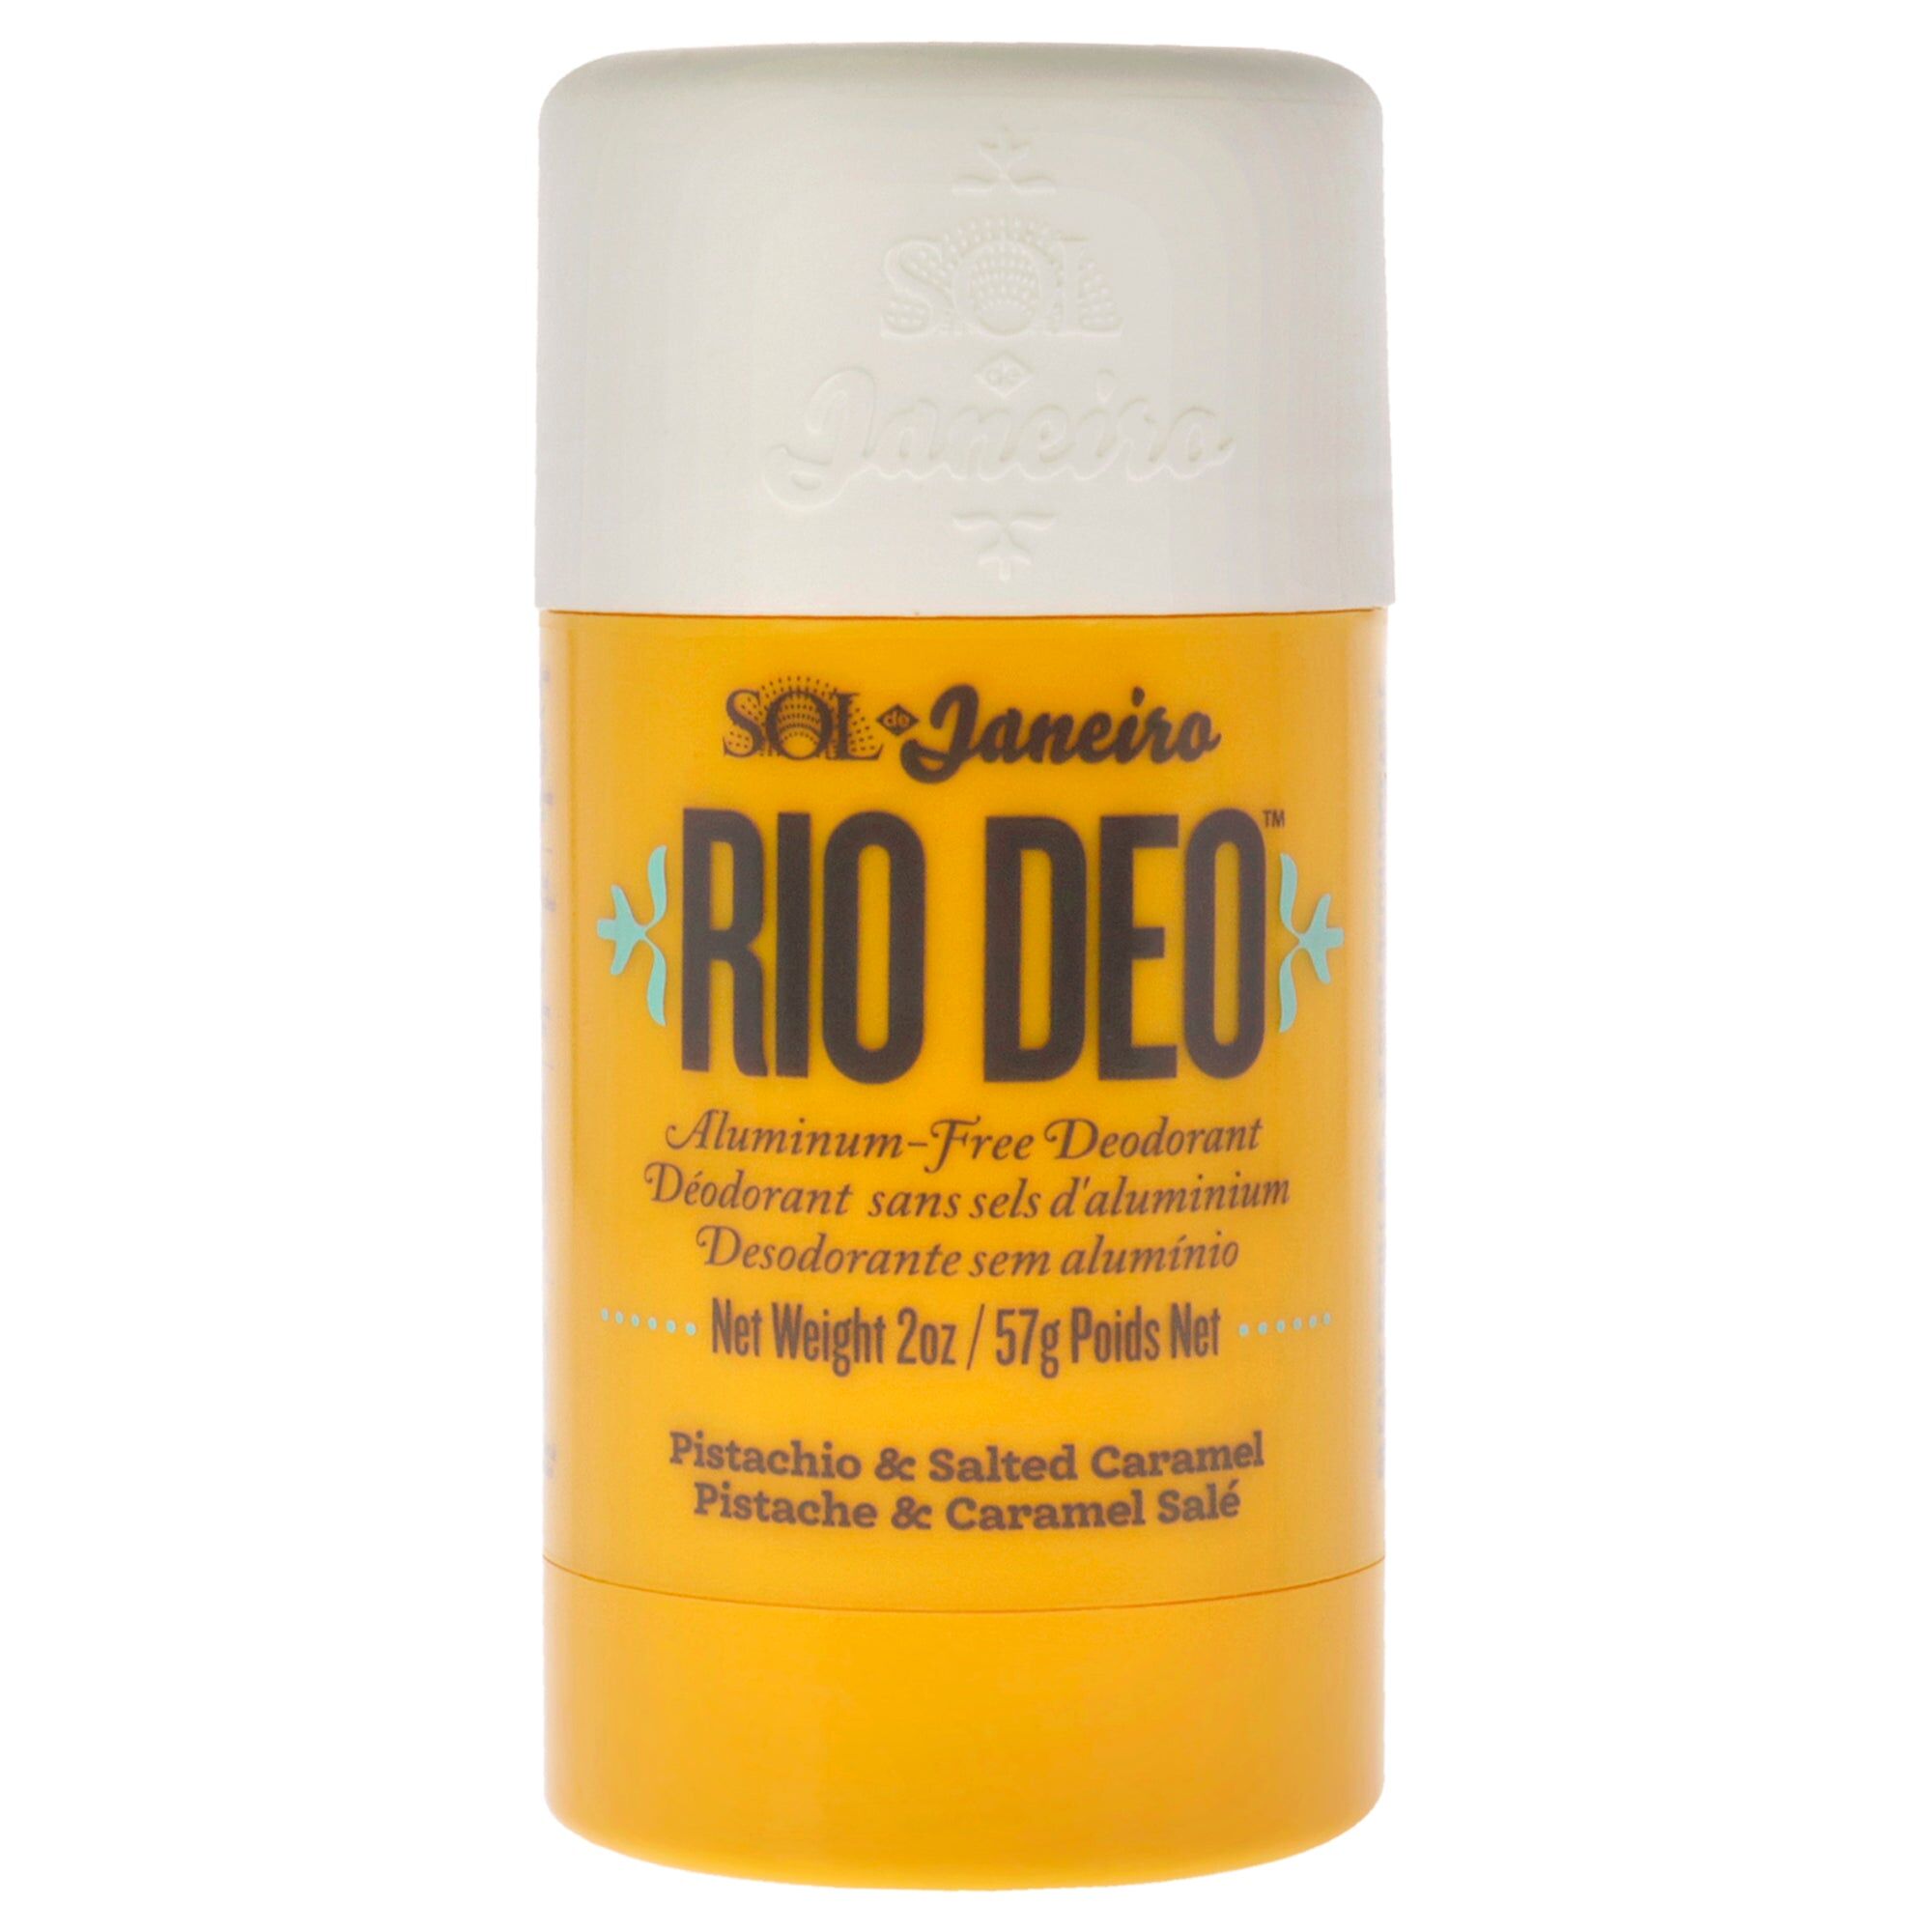 Rio Deo Aluminum-Free Deodorant - Pistachio and Salted Caramel by Sol de Janeiro for Unisex - 2 oz Deodorant Stick 2.0 oz unisex